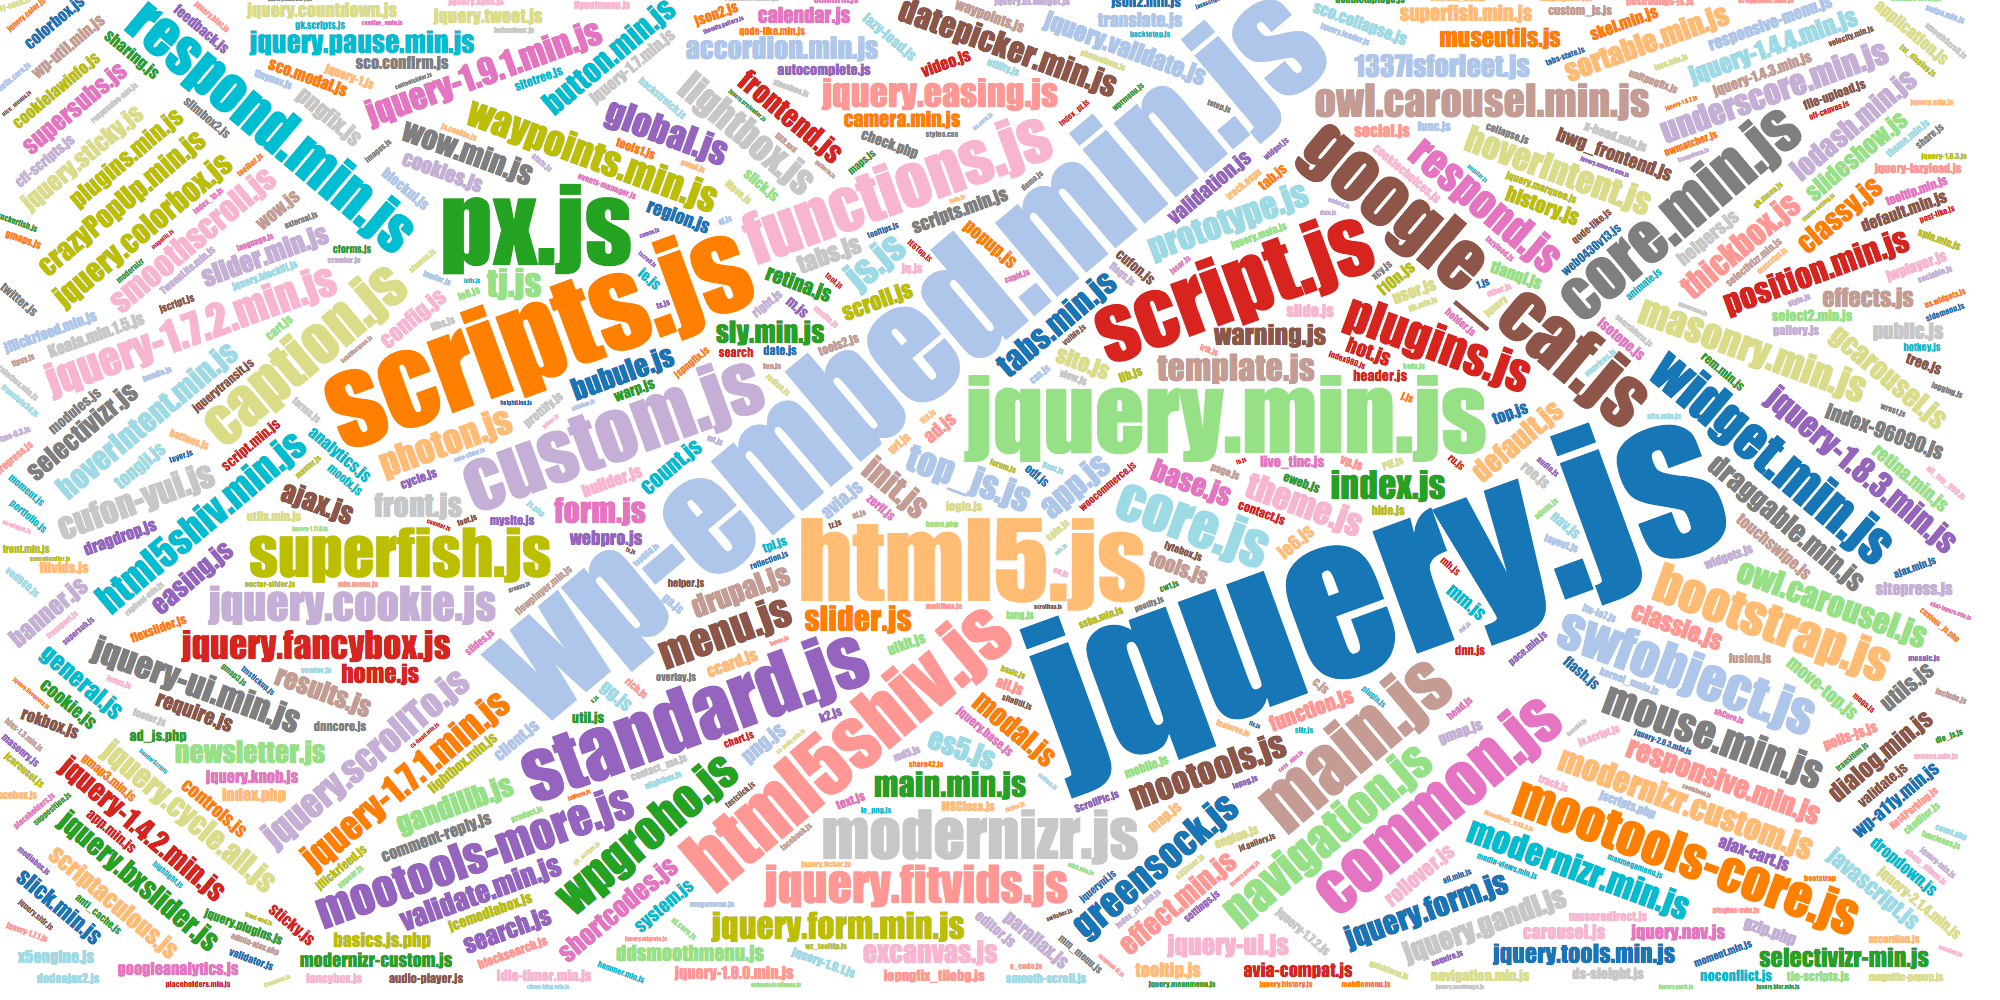 Popular names of JS files adsbygoogle.js, app.js, etc.